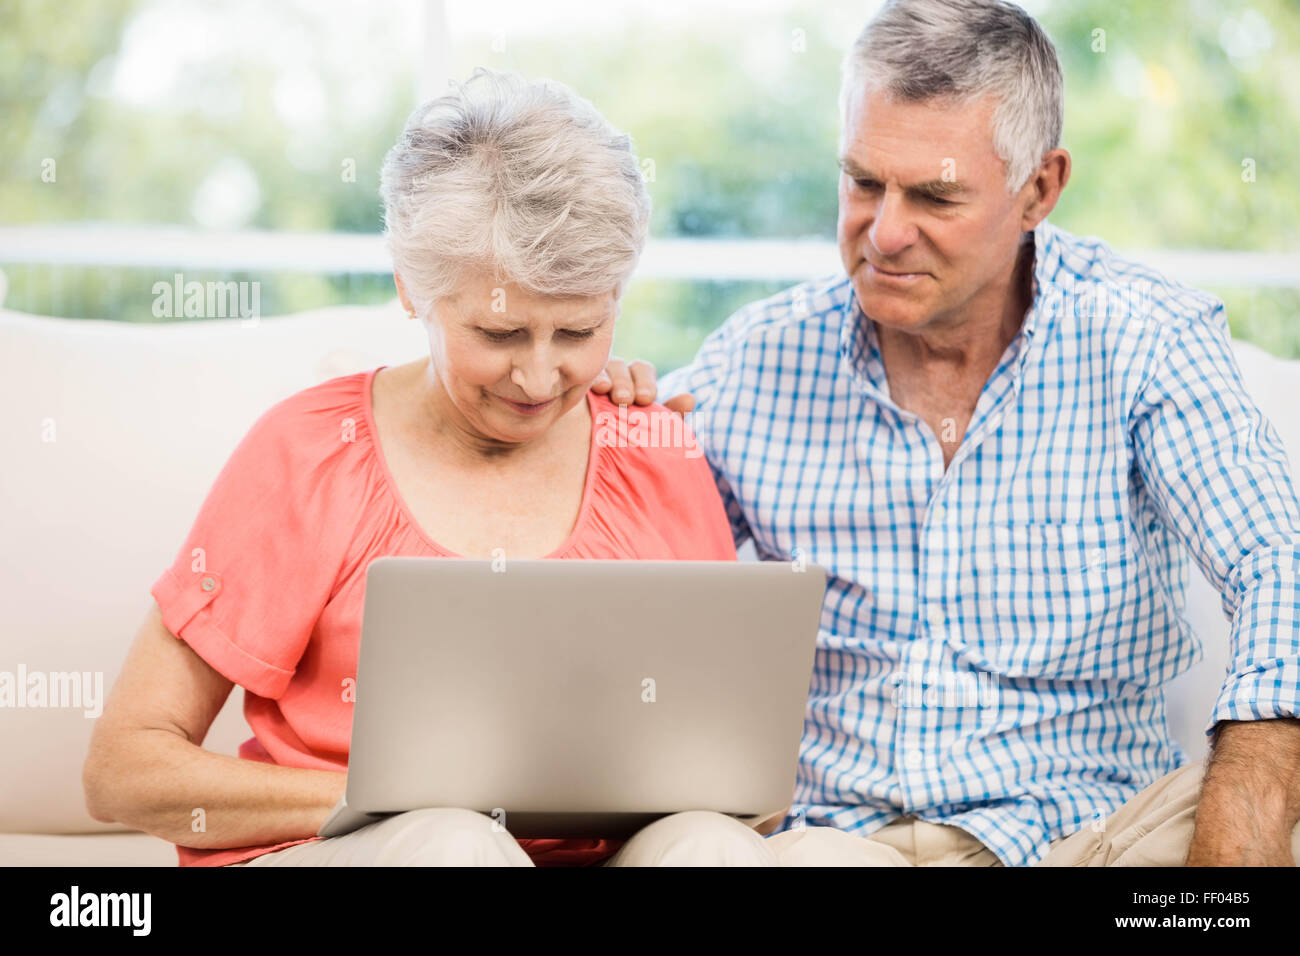 Smiling senior couple using laptop Stock Photo